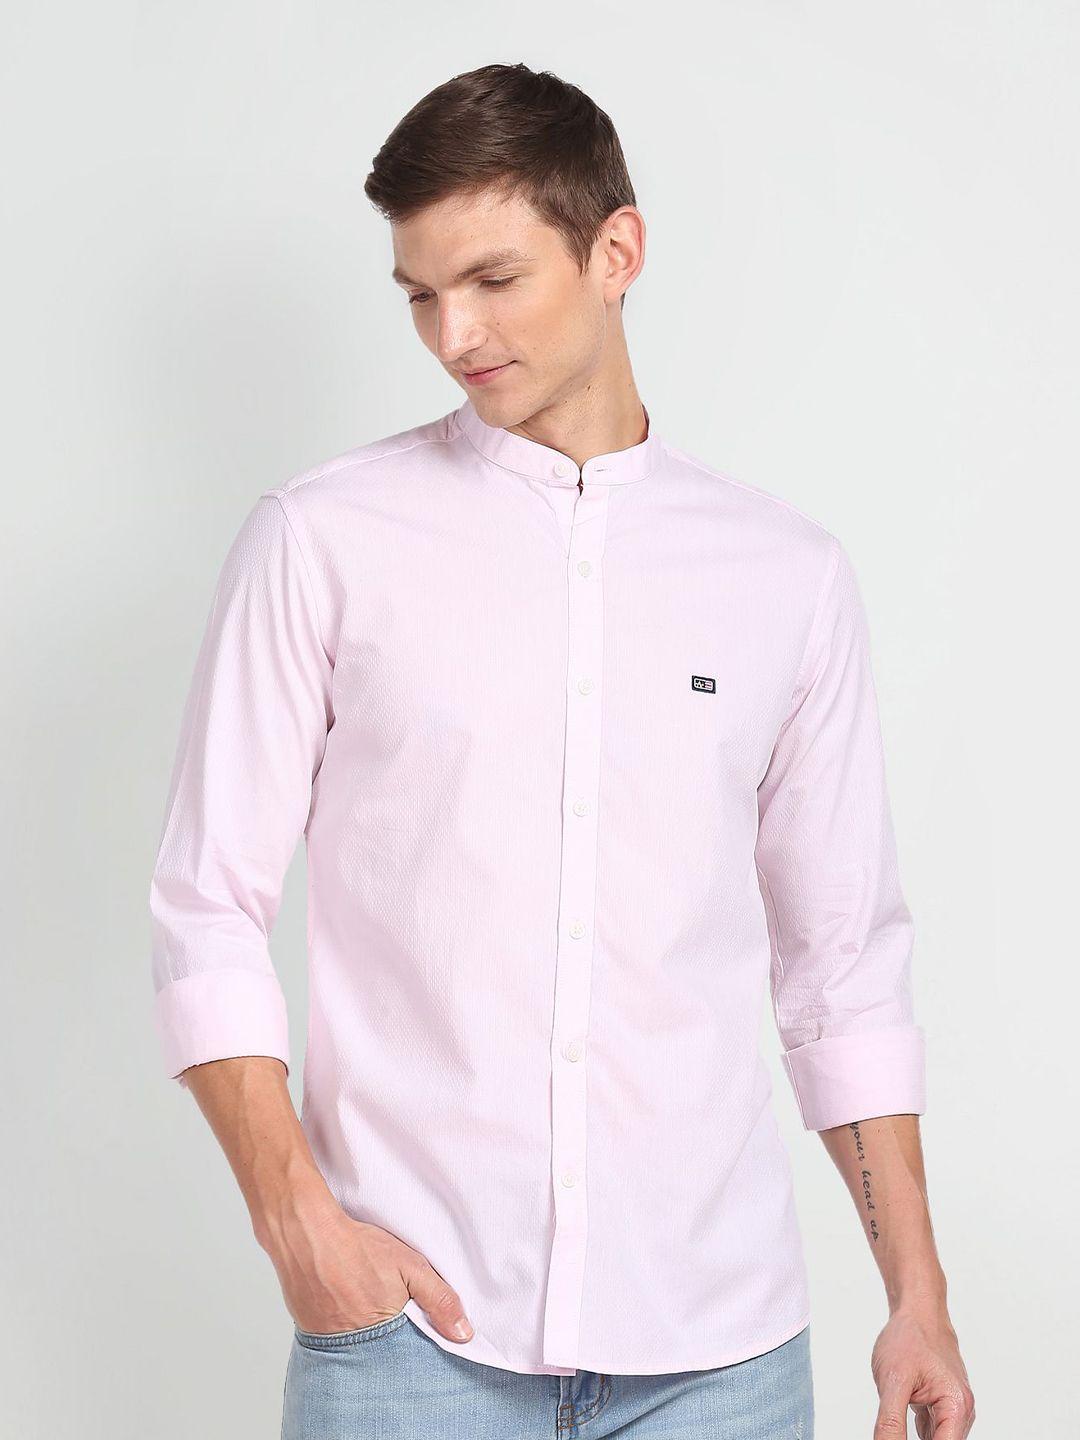 arrow sport slim fit self design mandarin collar pure cotton casual shirt